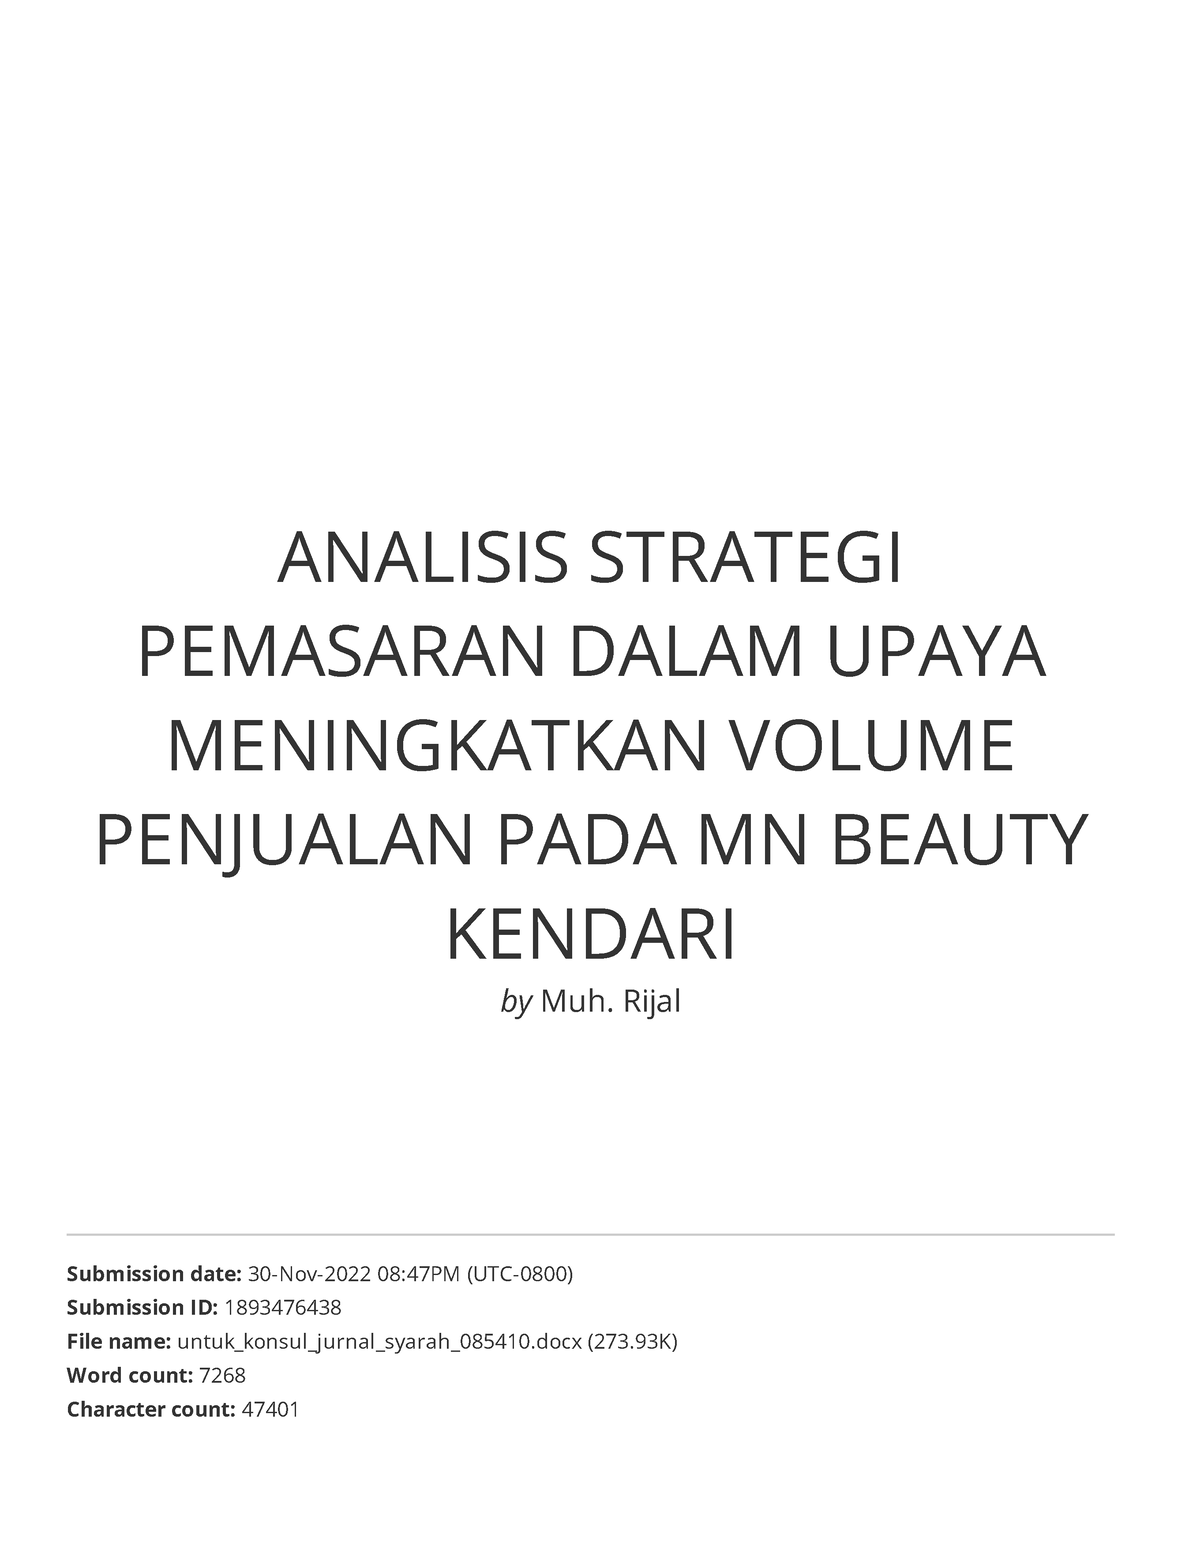 Analisis Strategi Pemasaran Dalam Upaya Meningkatkan Volume Penjualan Pada Mn Beauty Kendari 4074